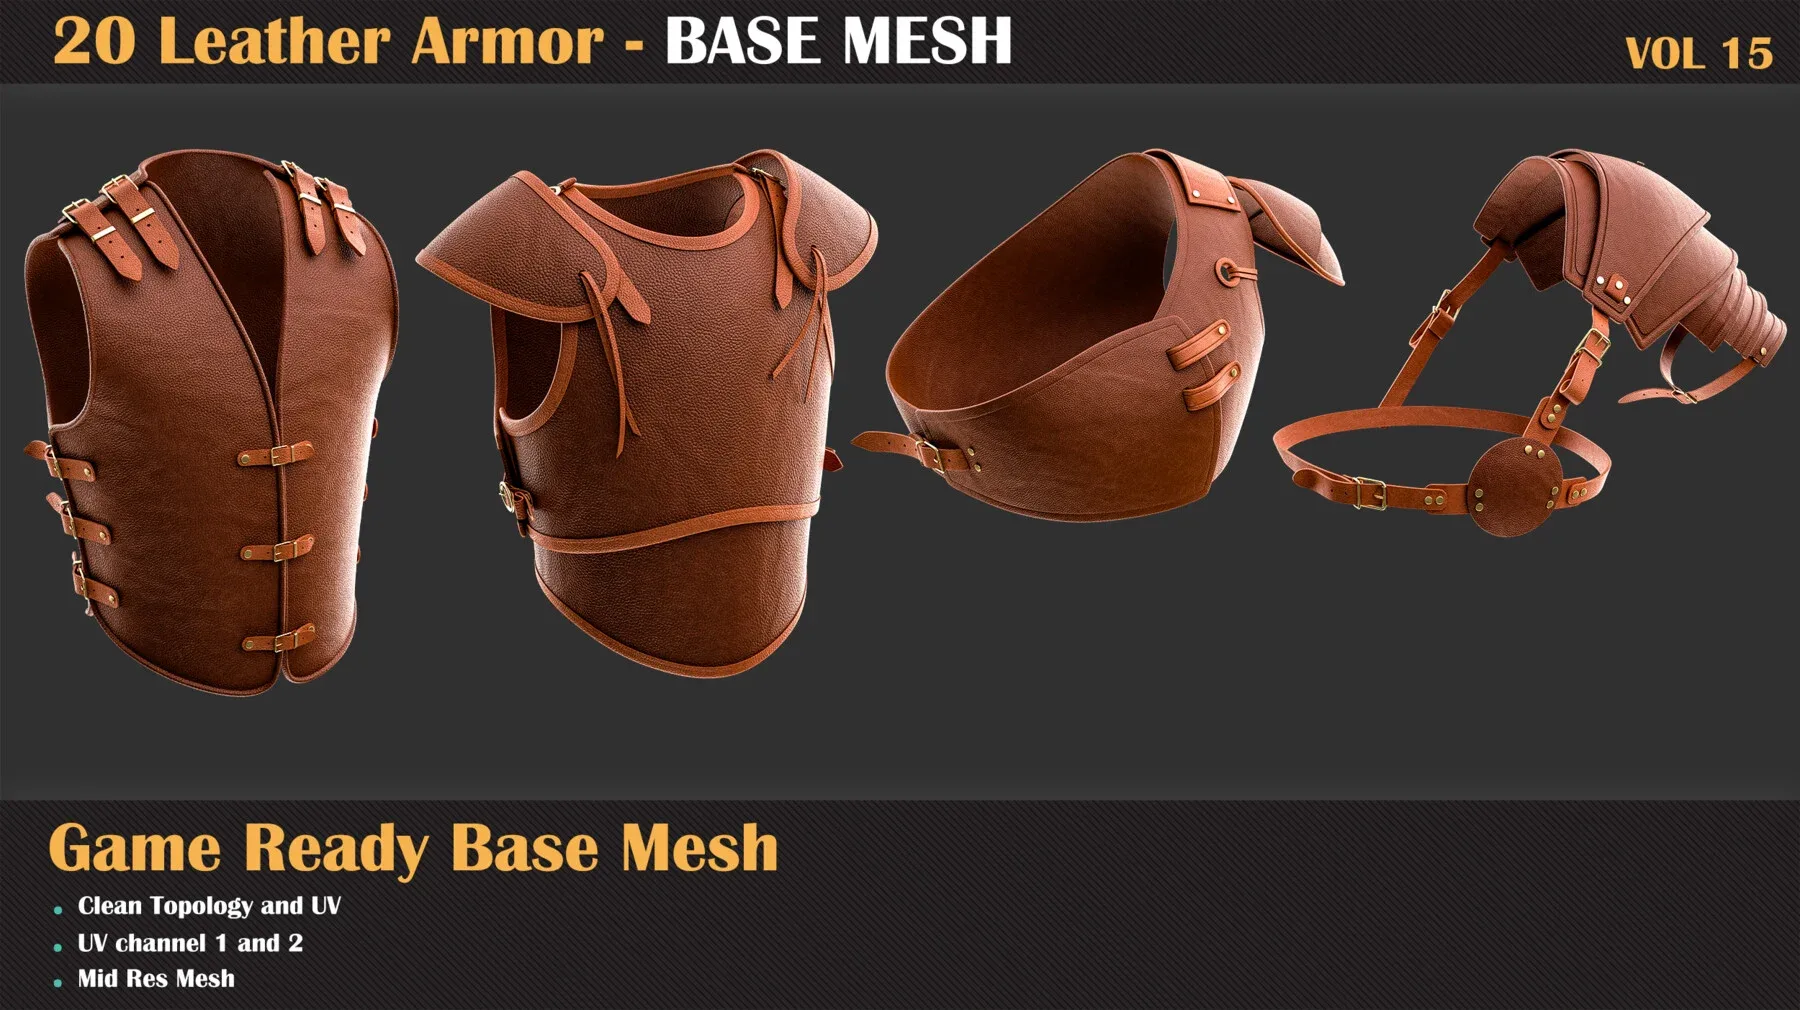 20 Leather Armor BASE MESH - VOL 15